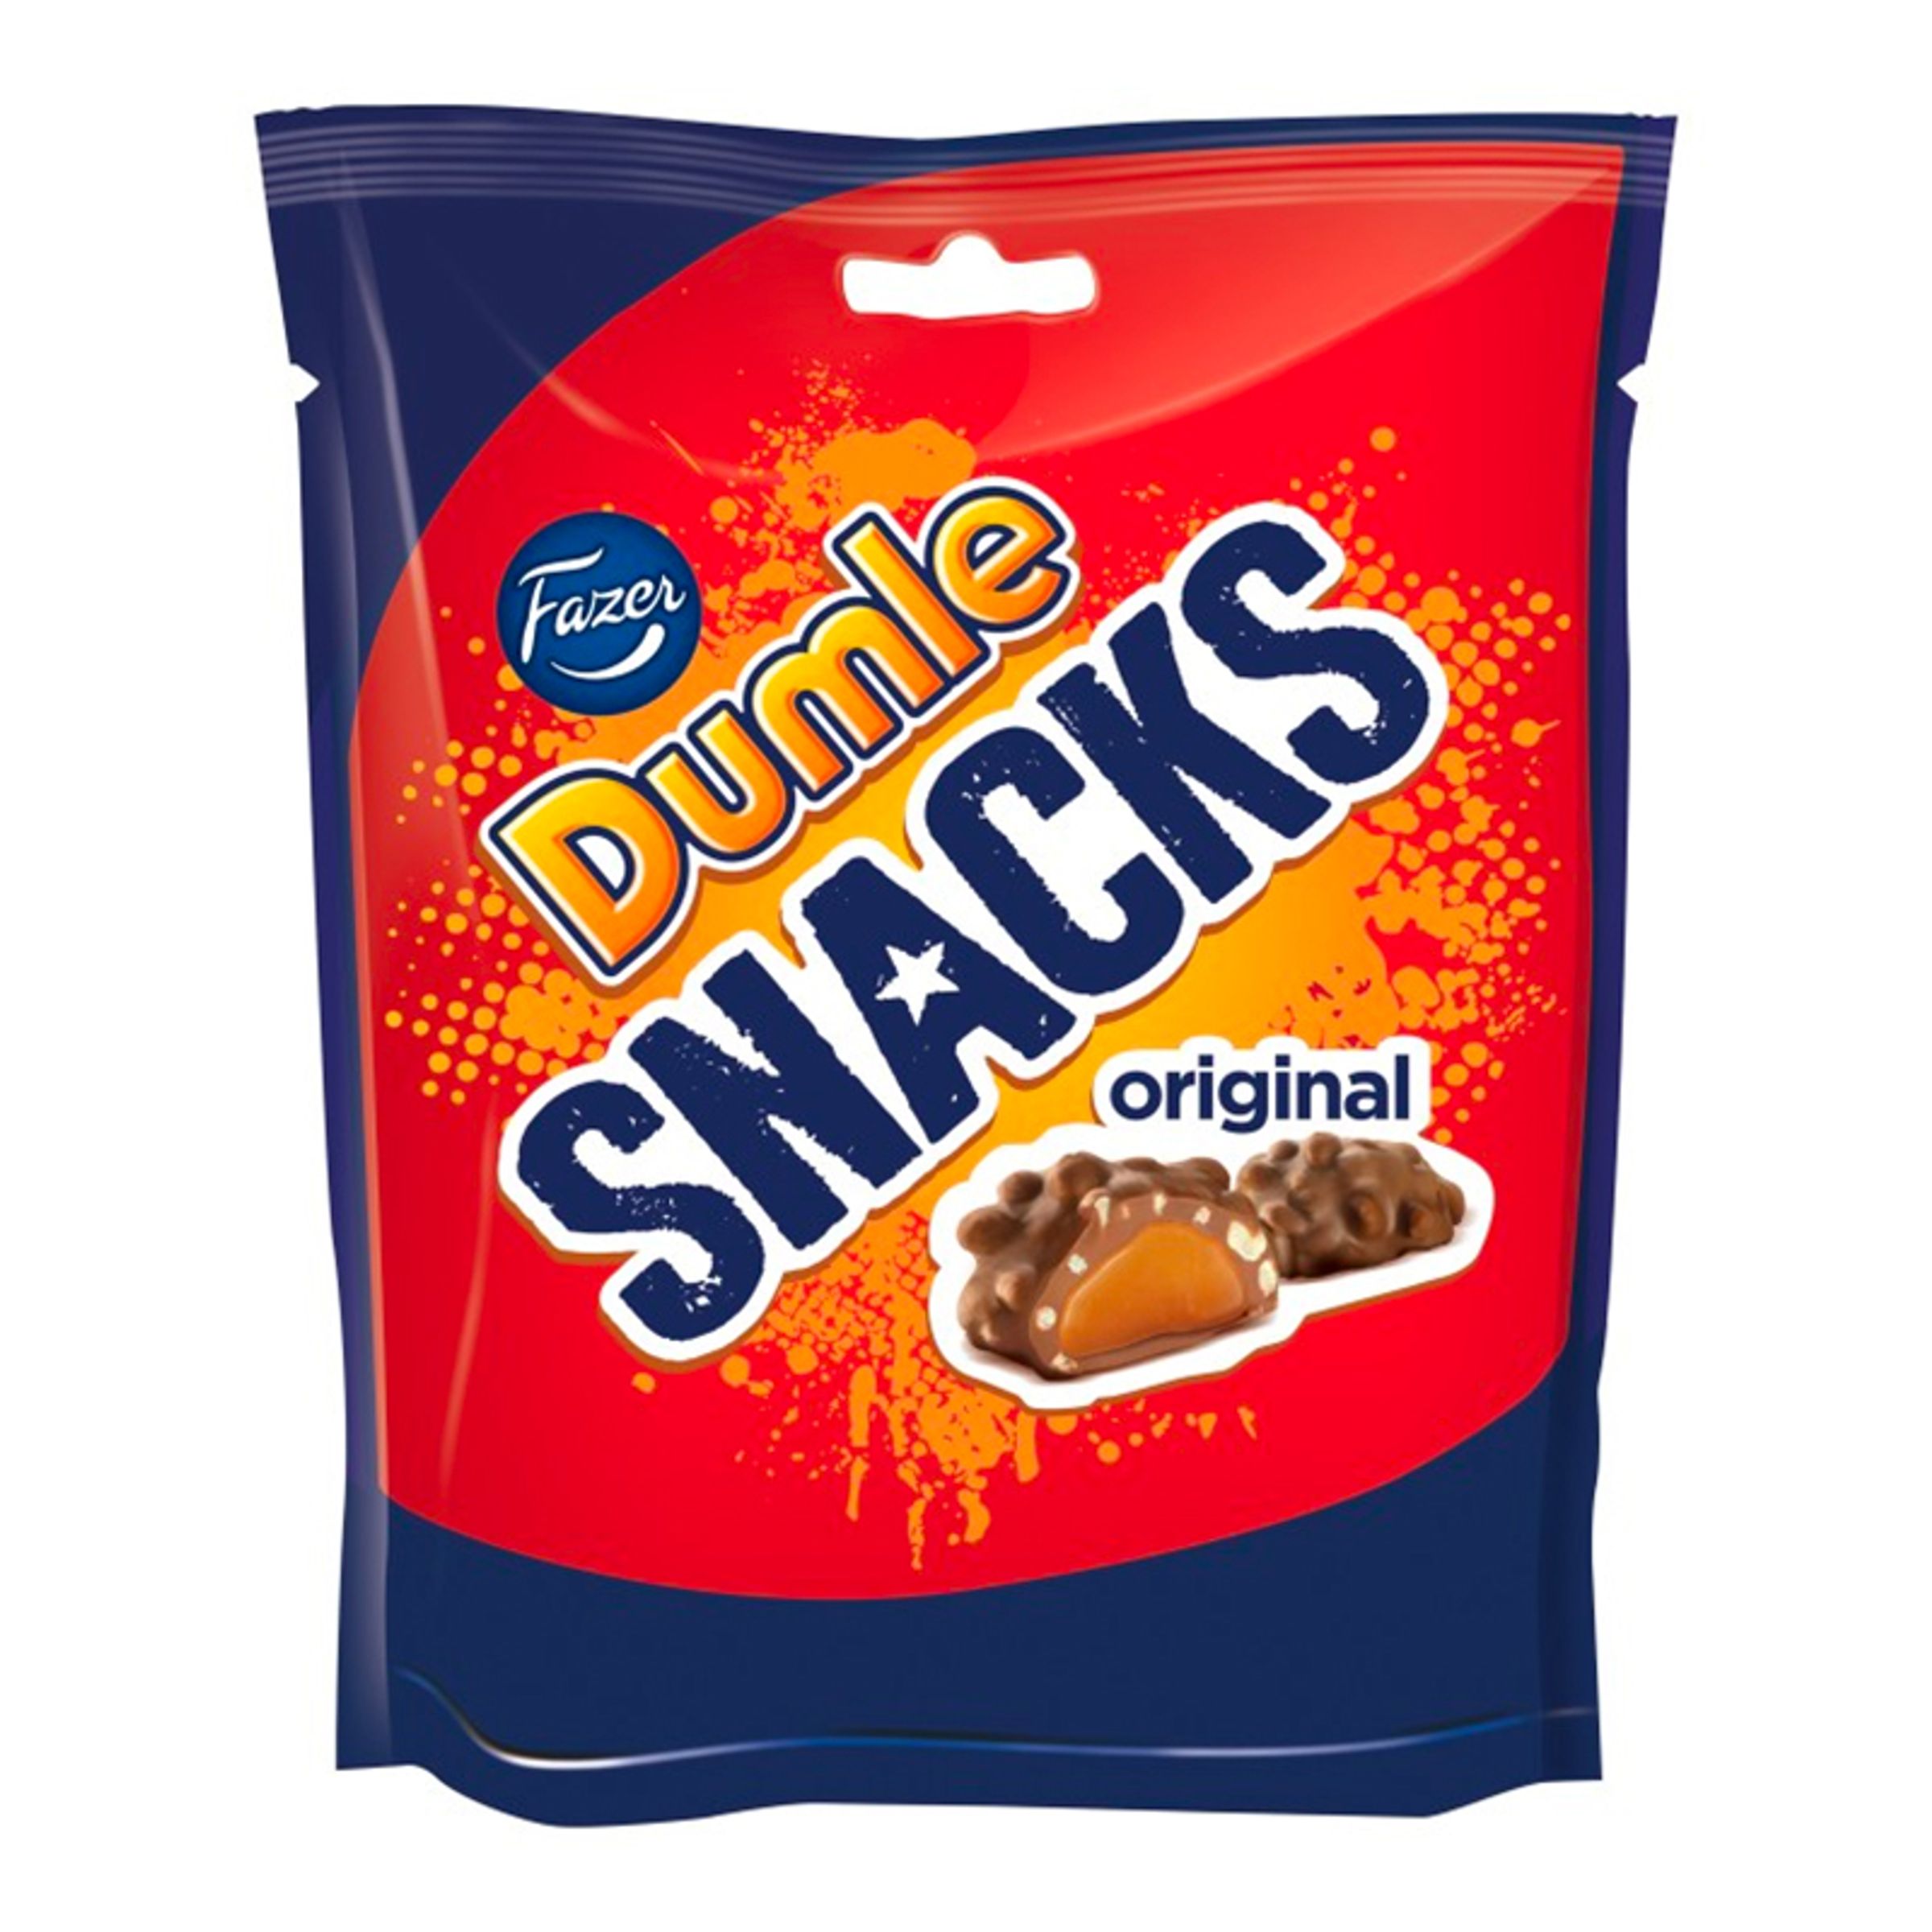 Dumle Snacks Original - 100 gram